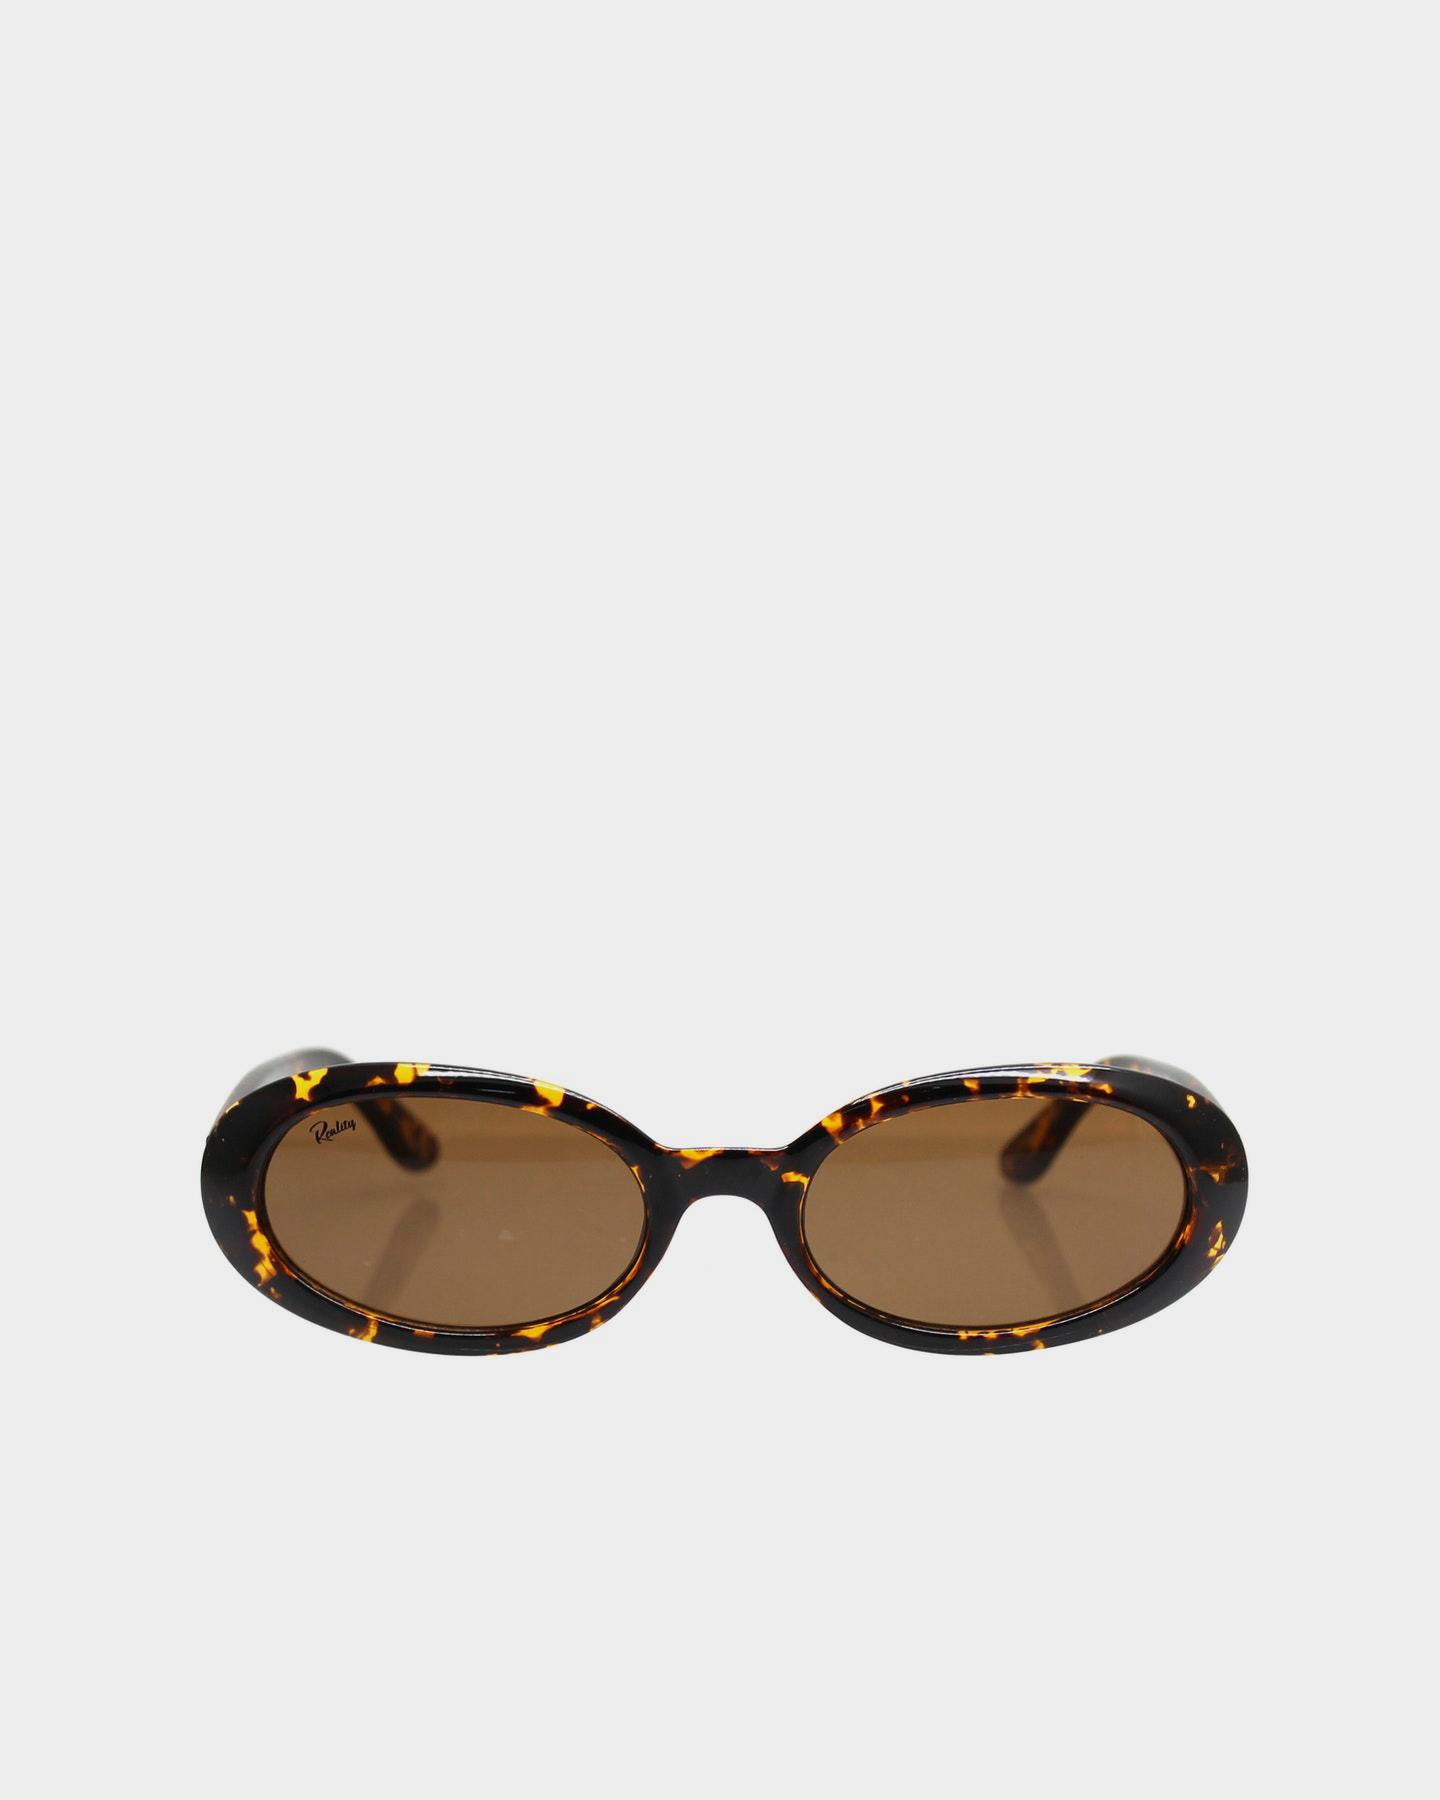 Reality Eyewear Eternal Orbit Sunglasses - Turtle | SurfStitch